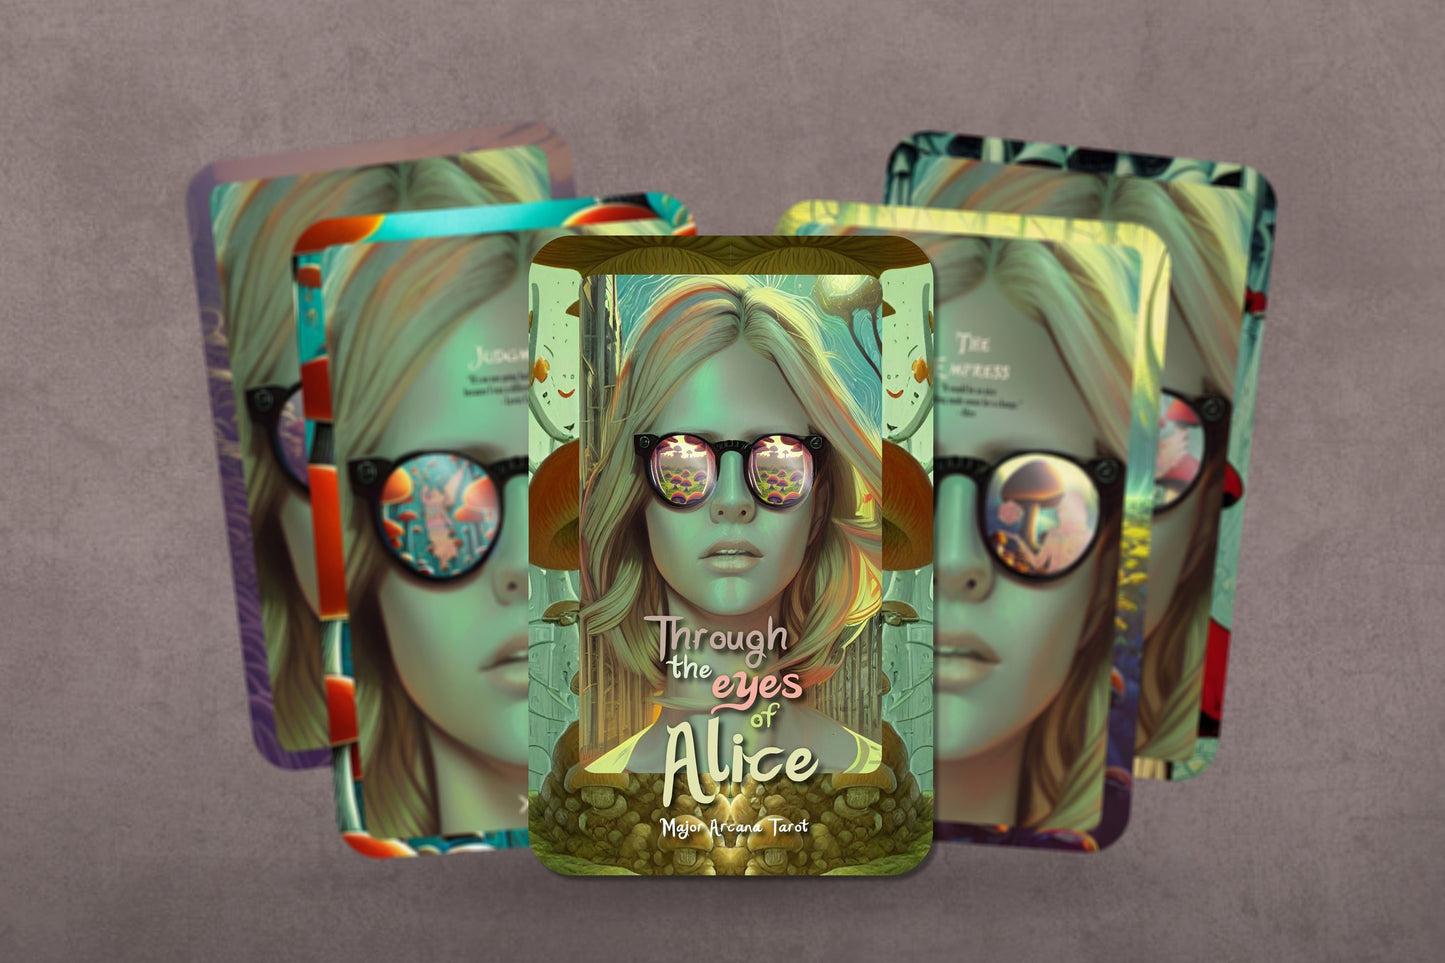 Through the eyes of Alice - Major Arcana - Alice in wonderland